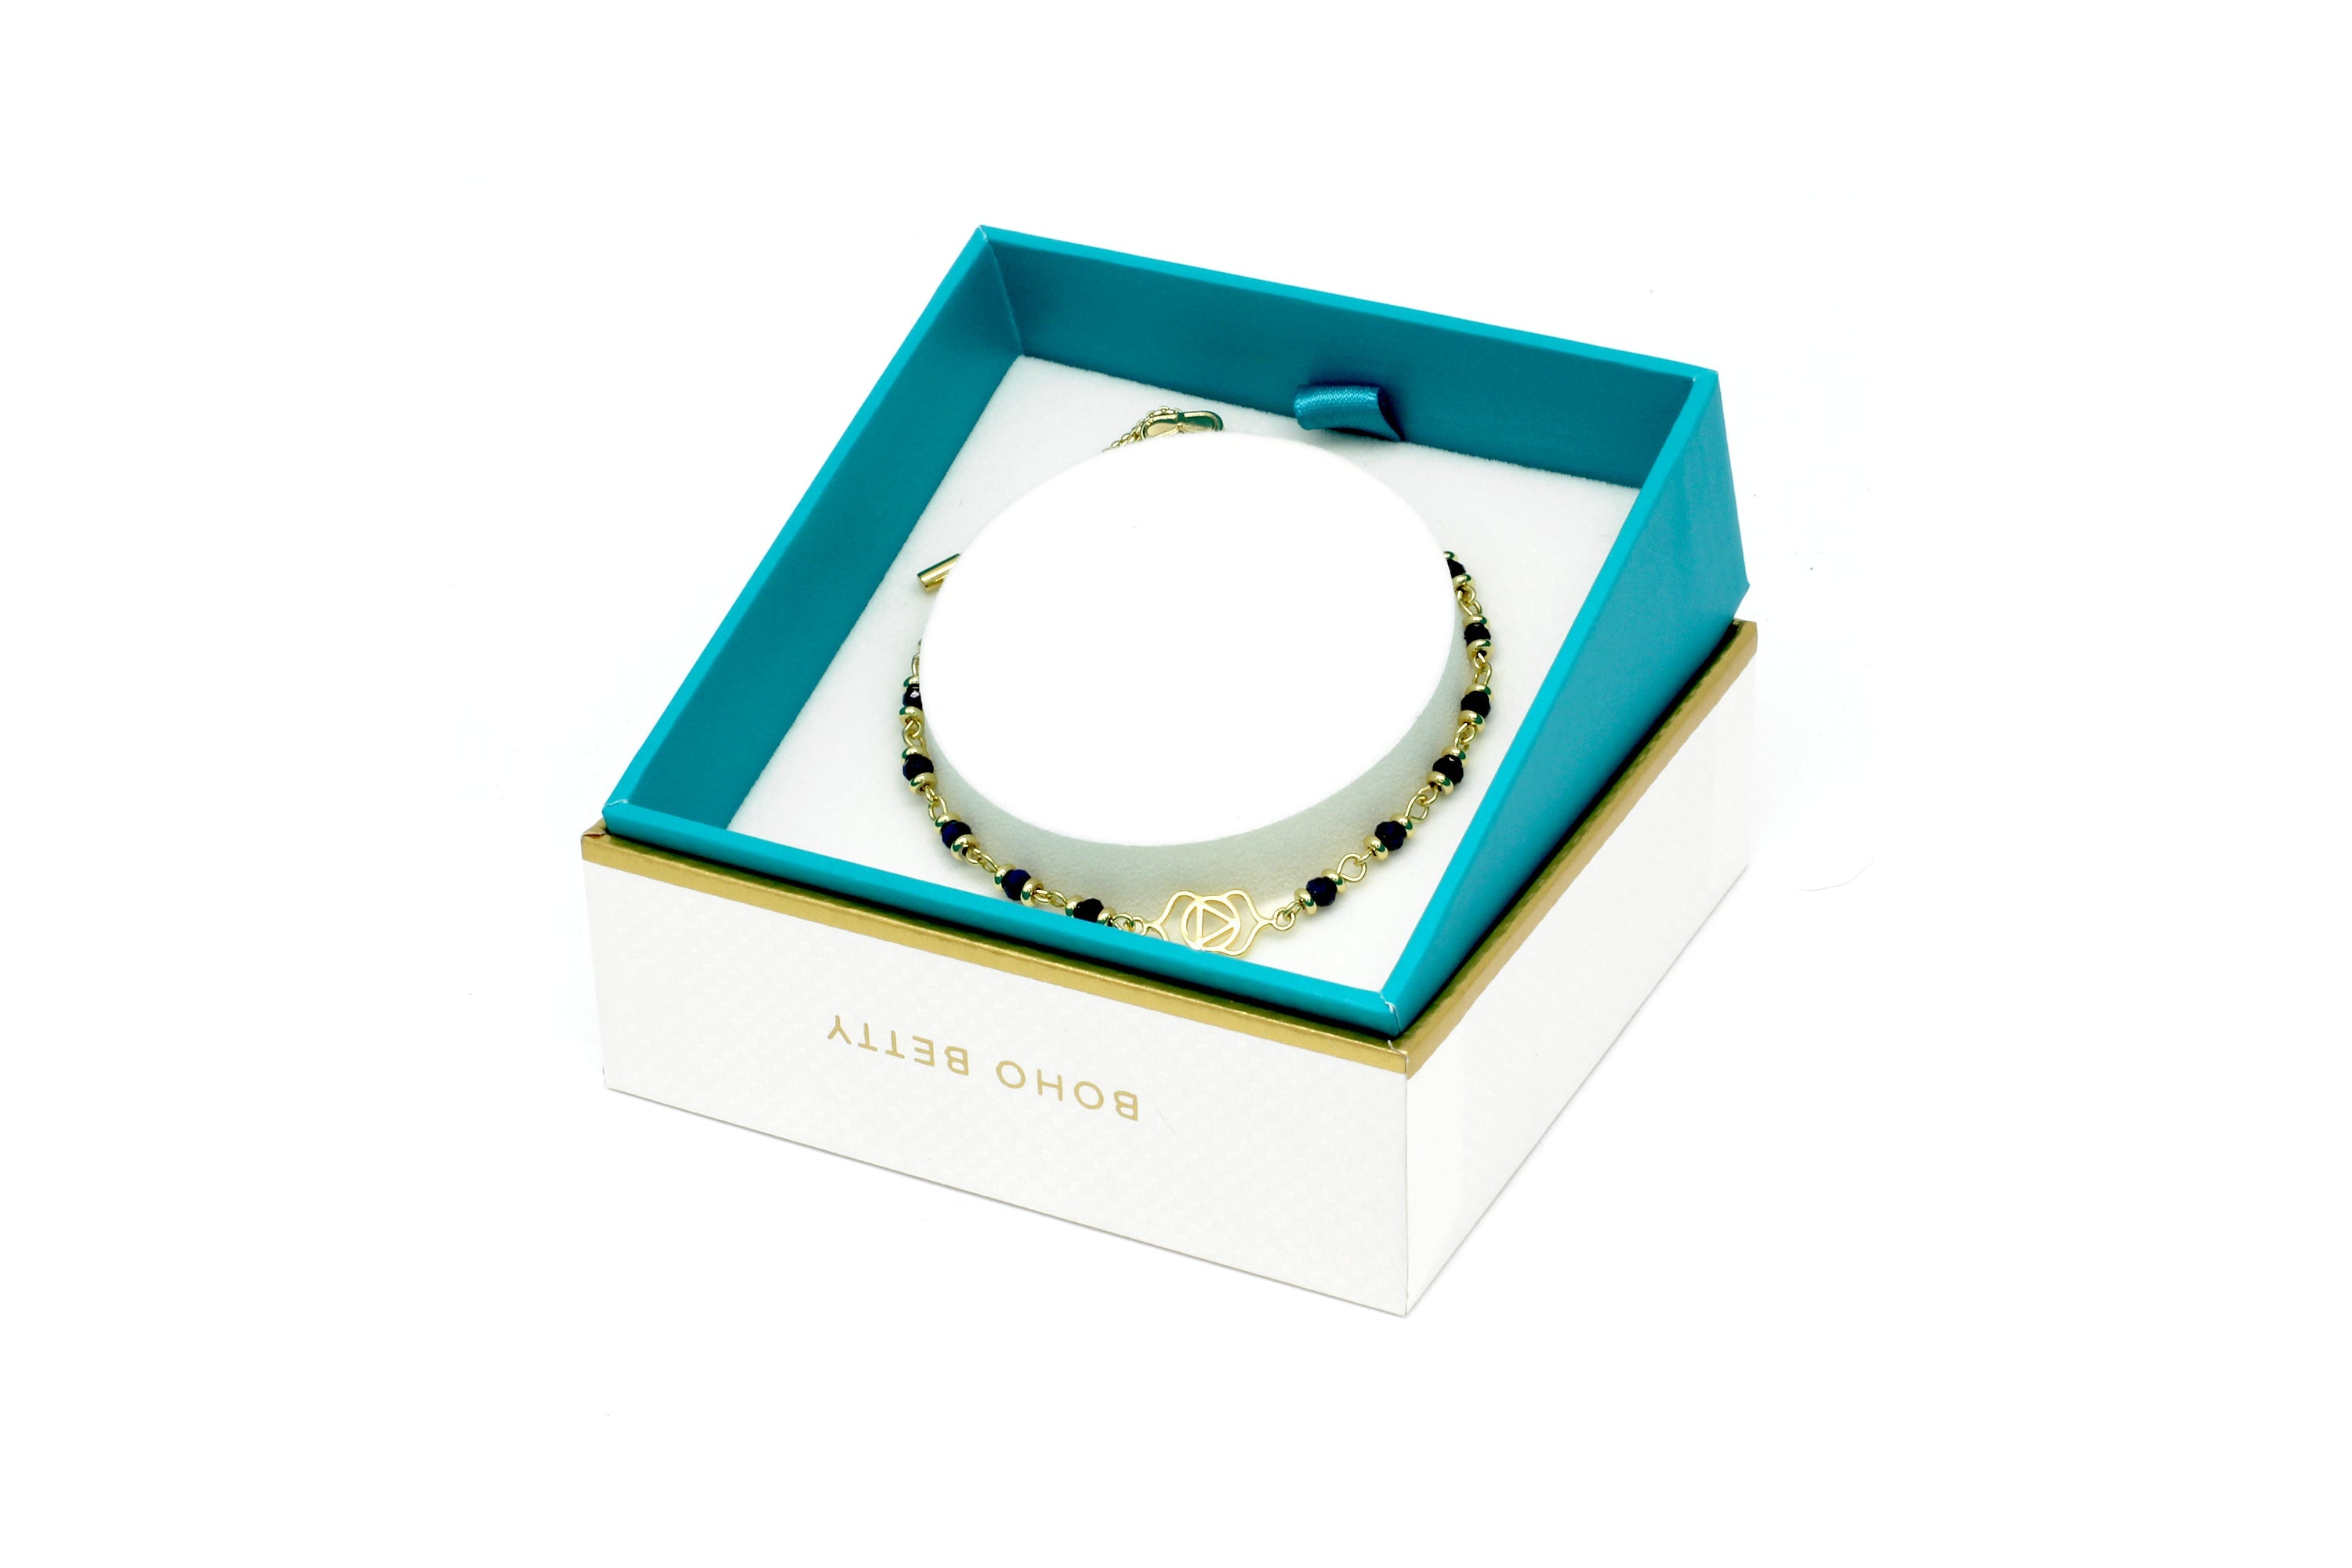 Bracelet Box with white bracelet foam insert